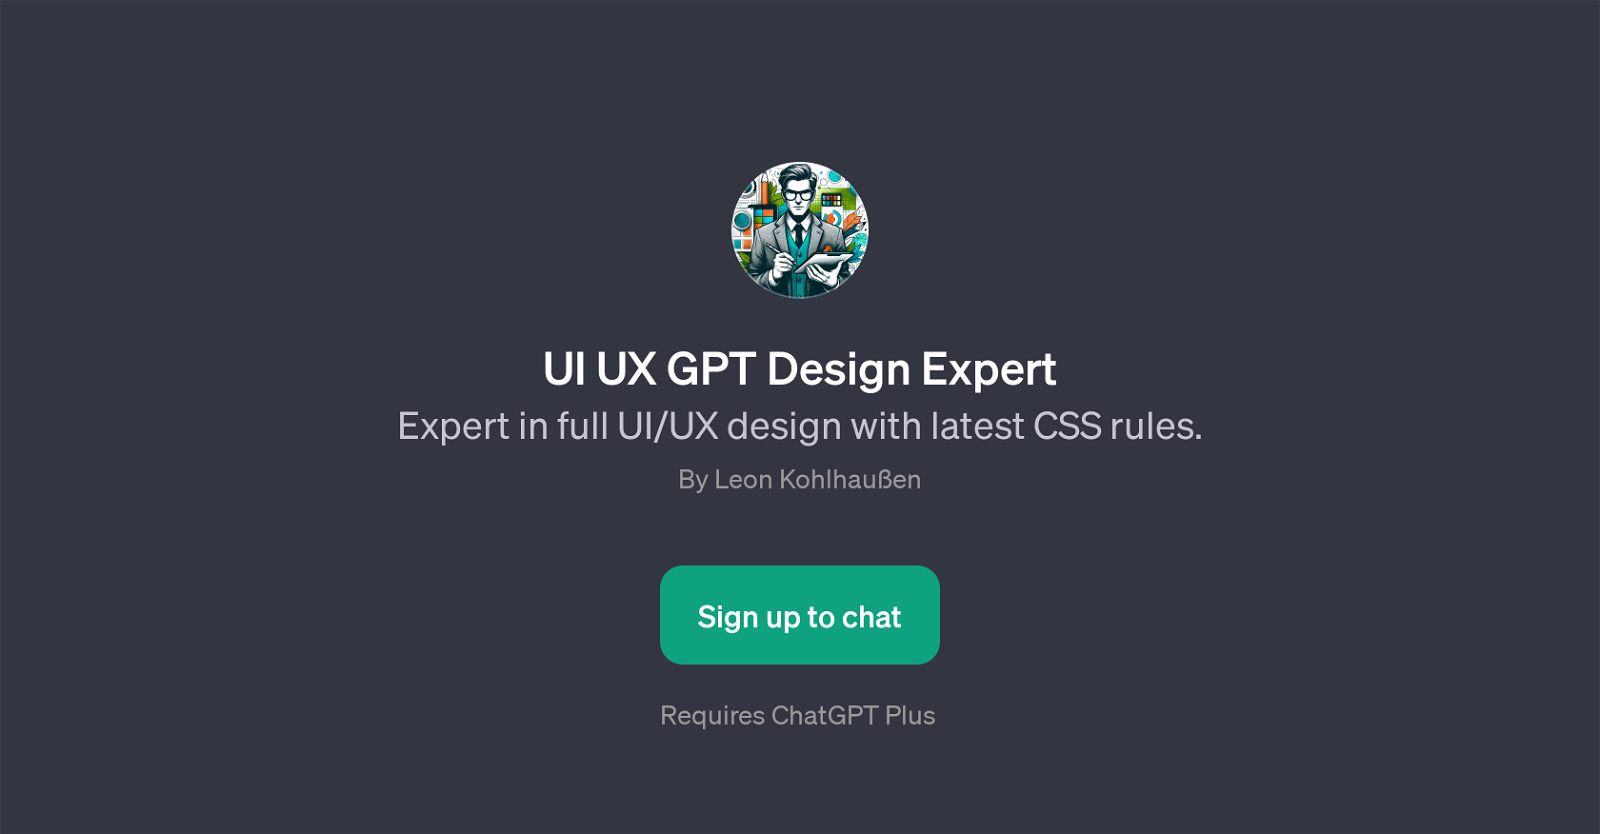 UI UX GPT Design Expert website